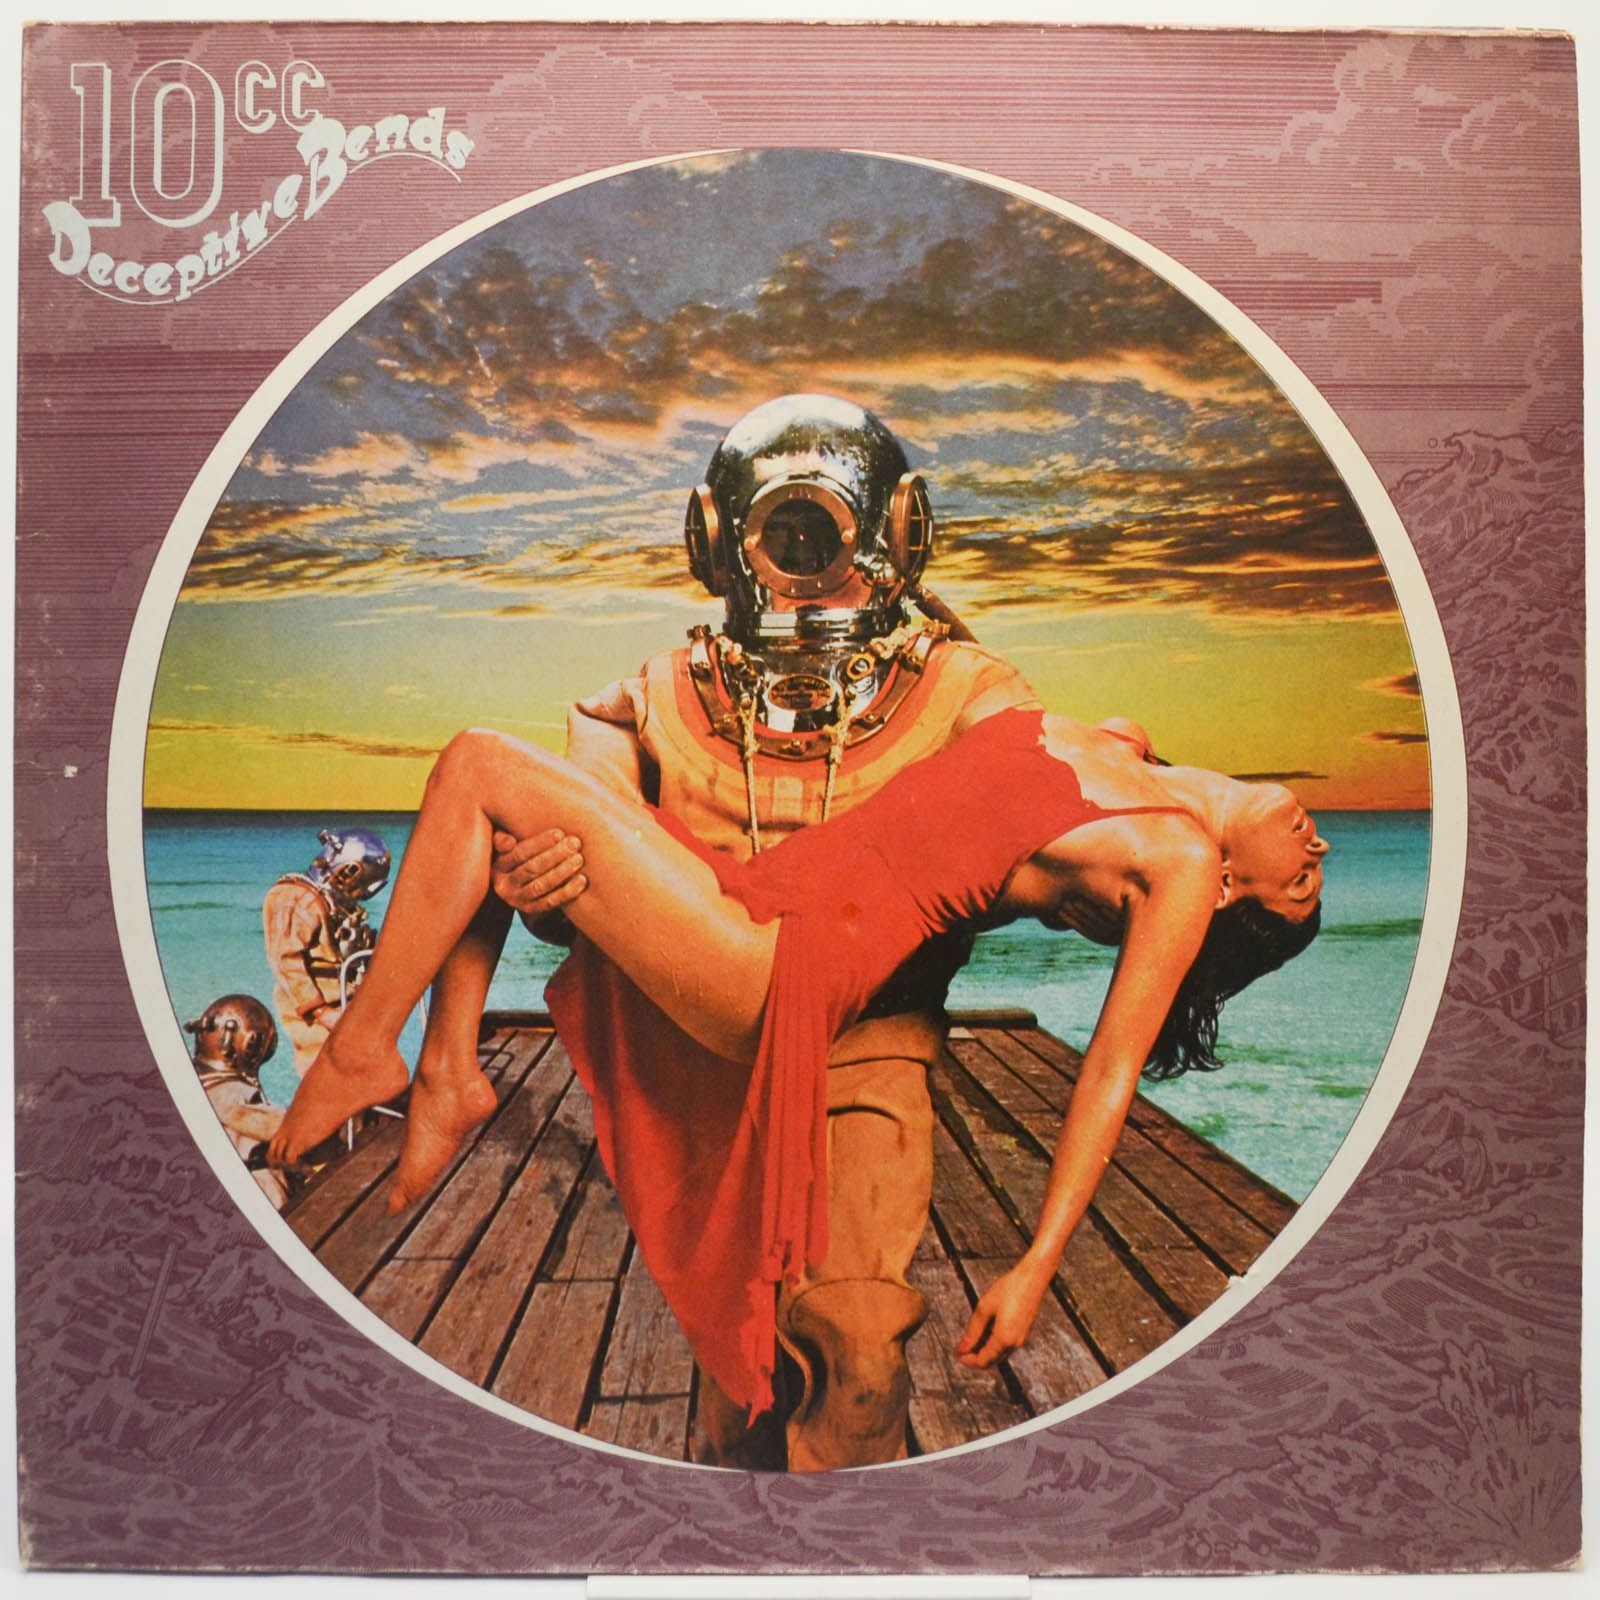 10cc — Deceptive Bends, 1977